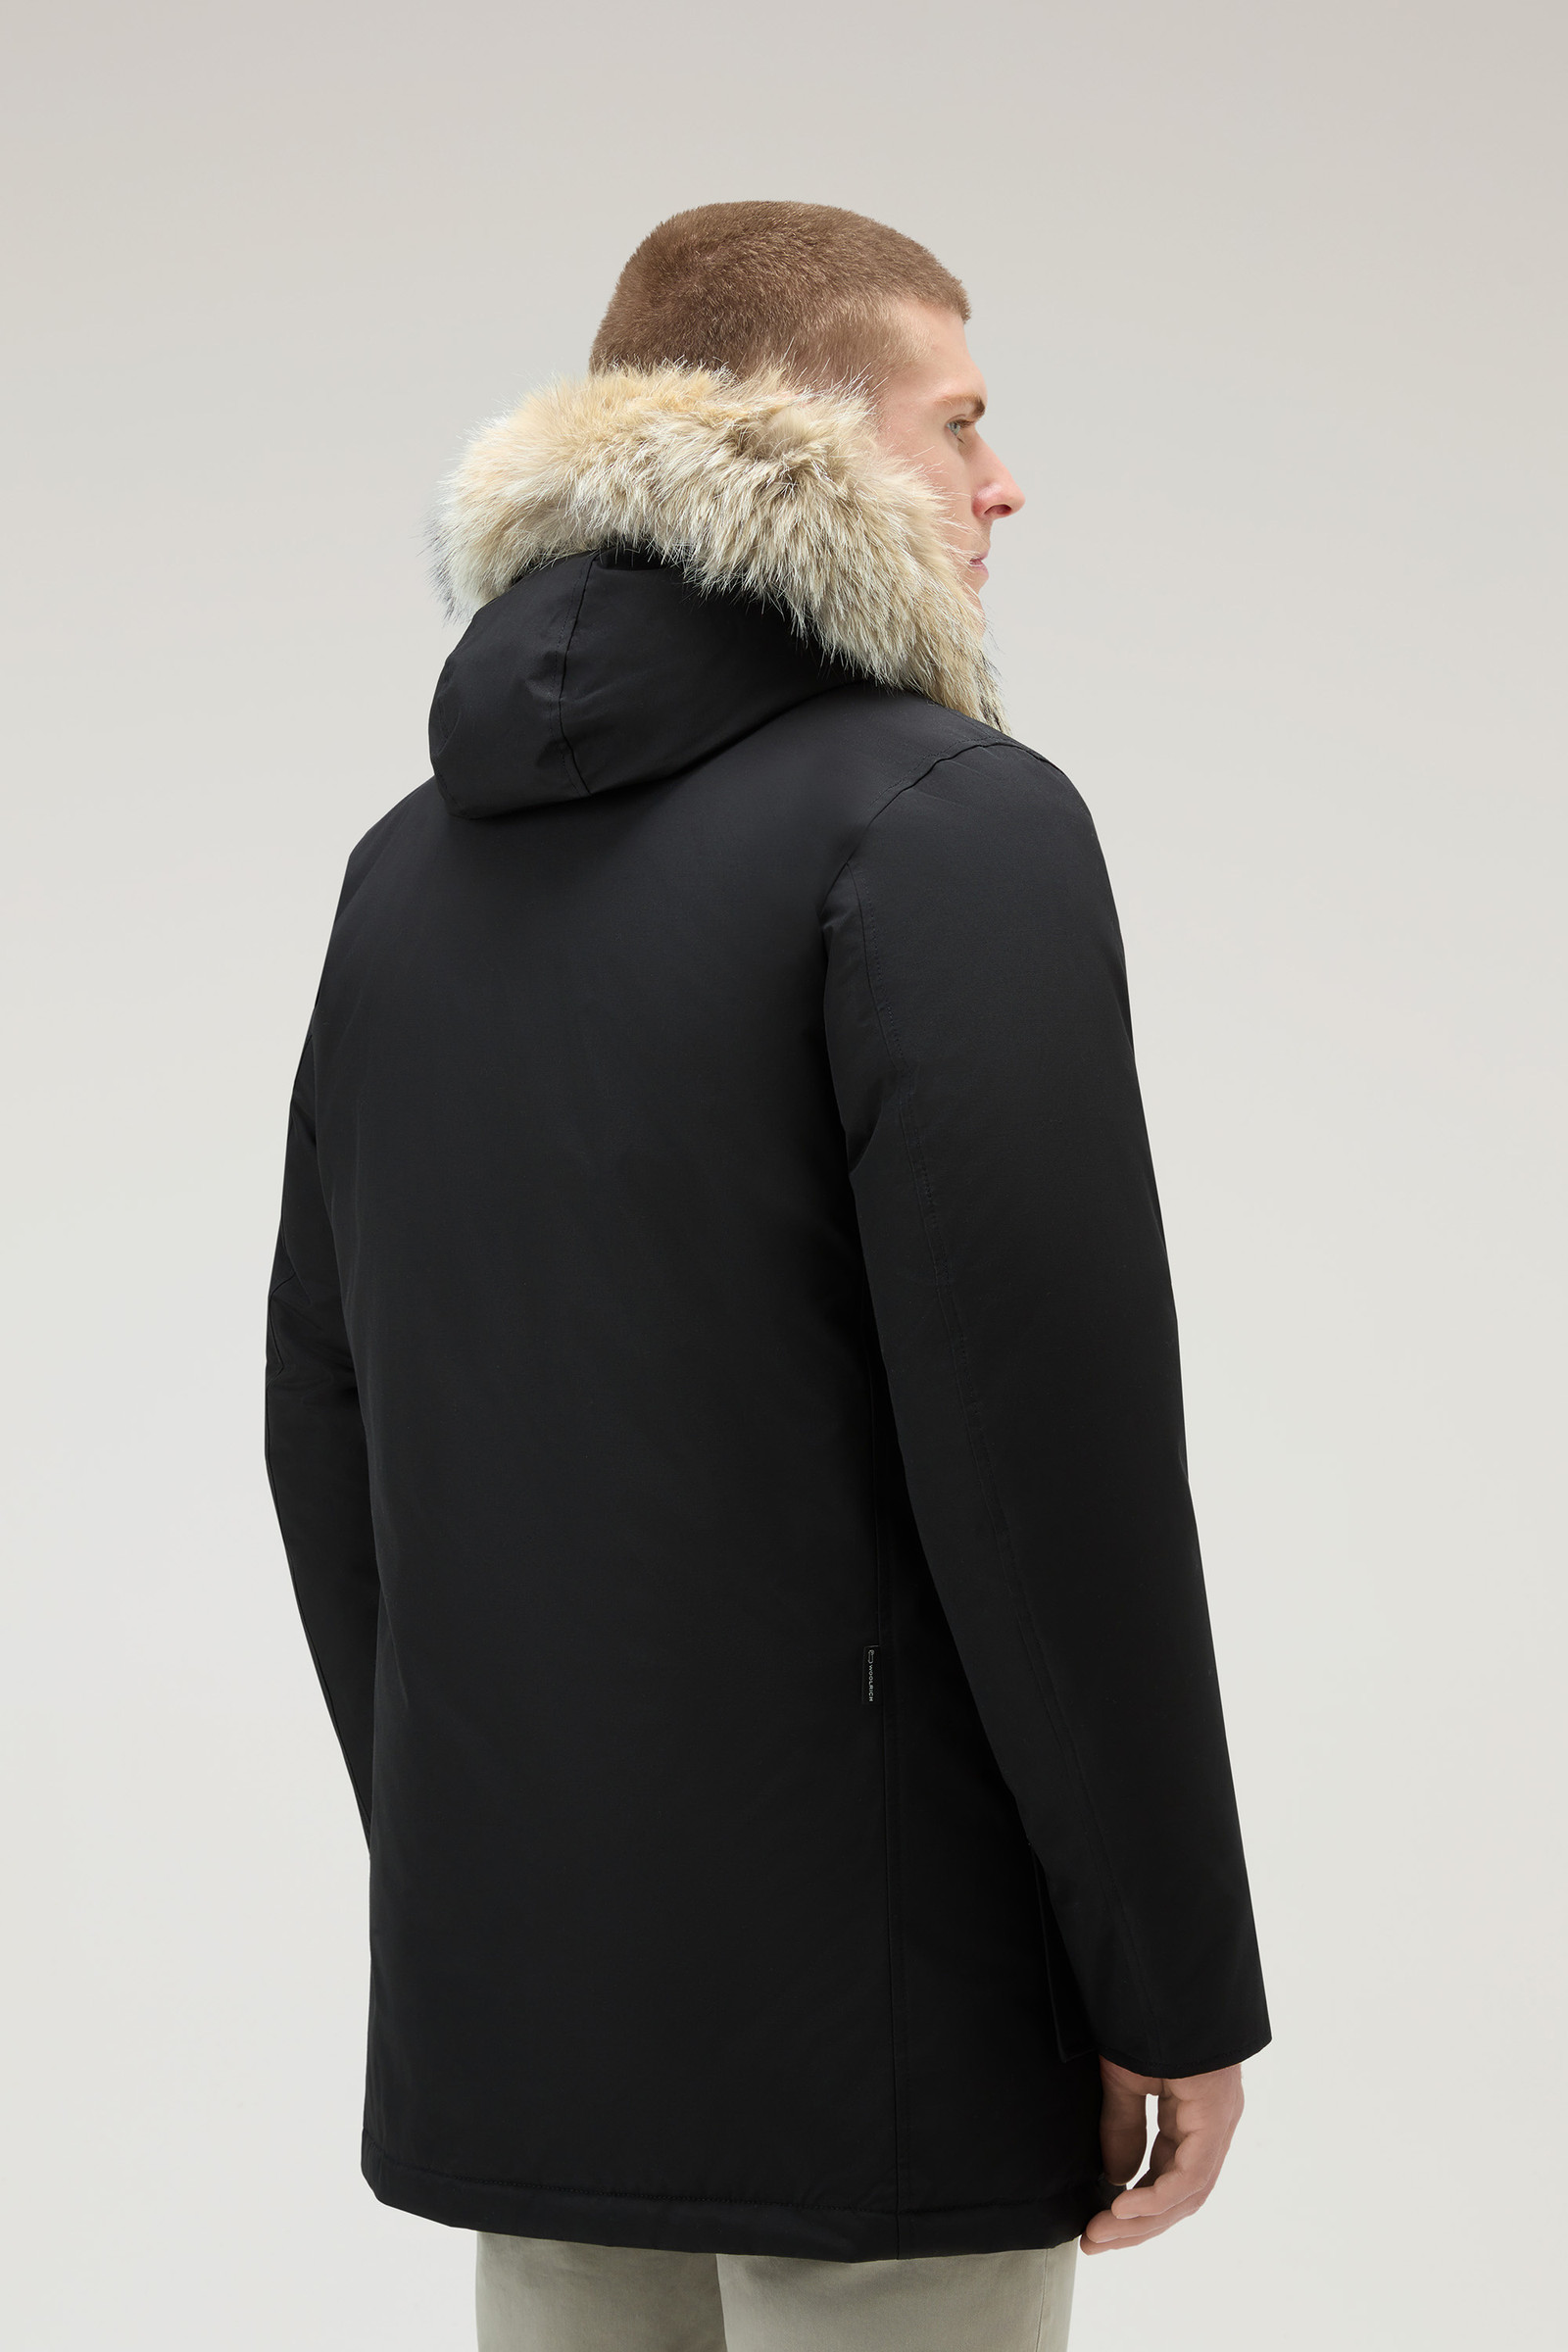 Men's Arctic Parka in Ramar Cloth with Detachable Fur Trim Black 